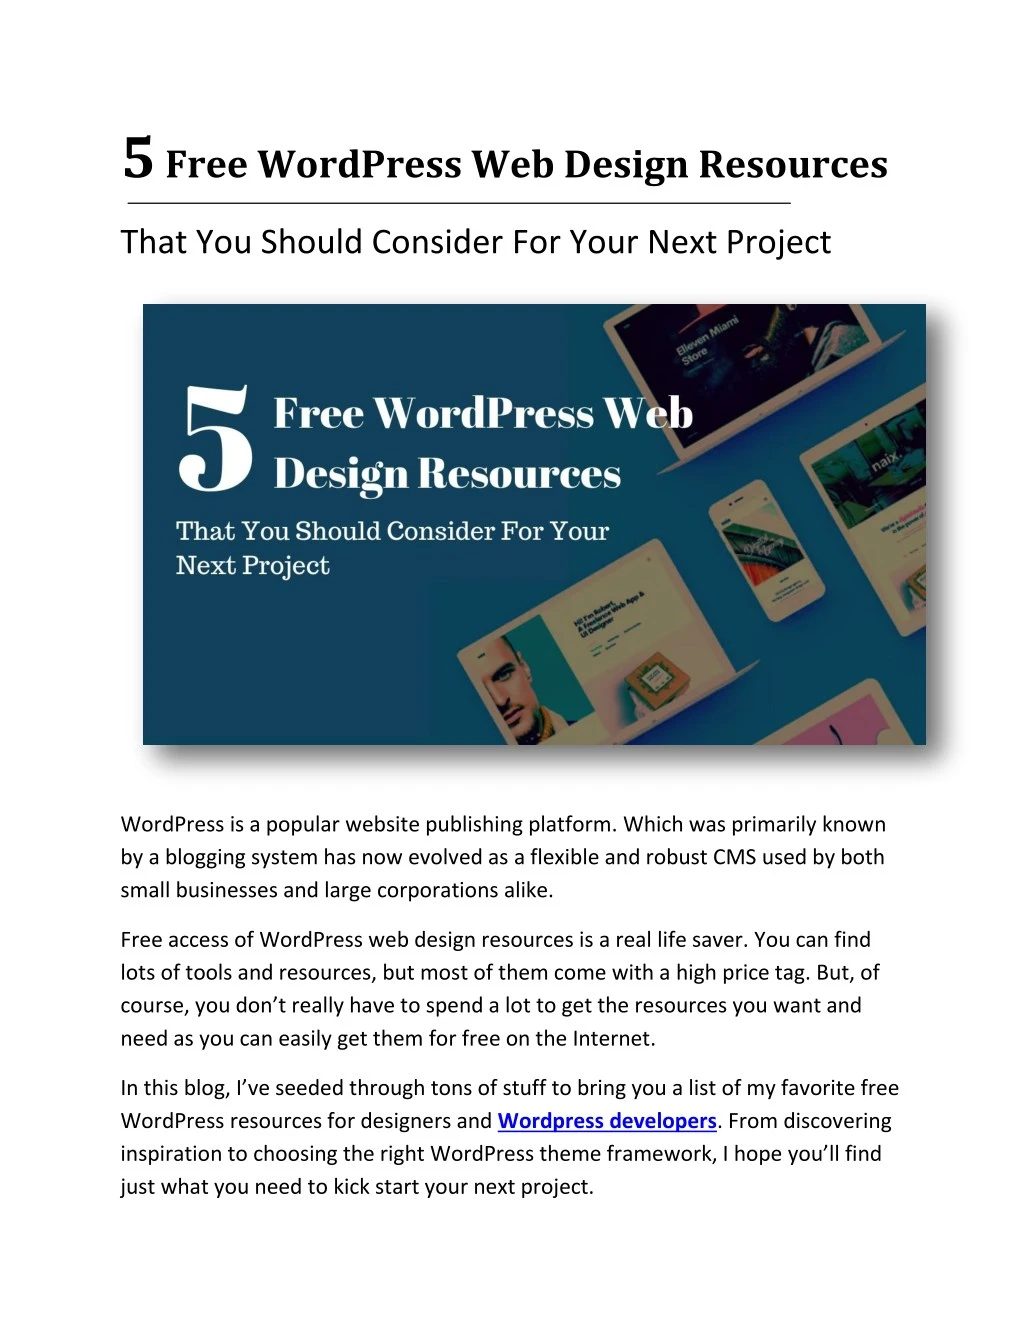 5 free wordpress web design resources